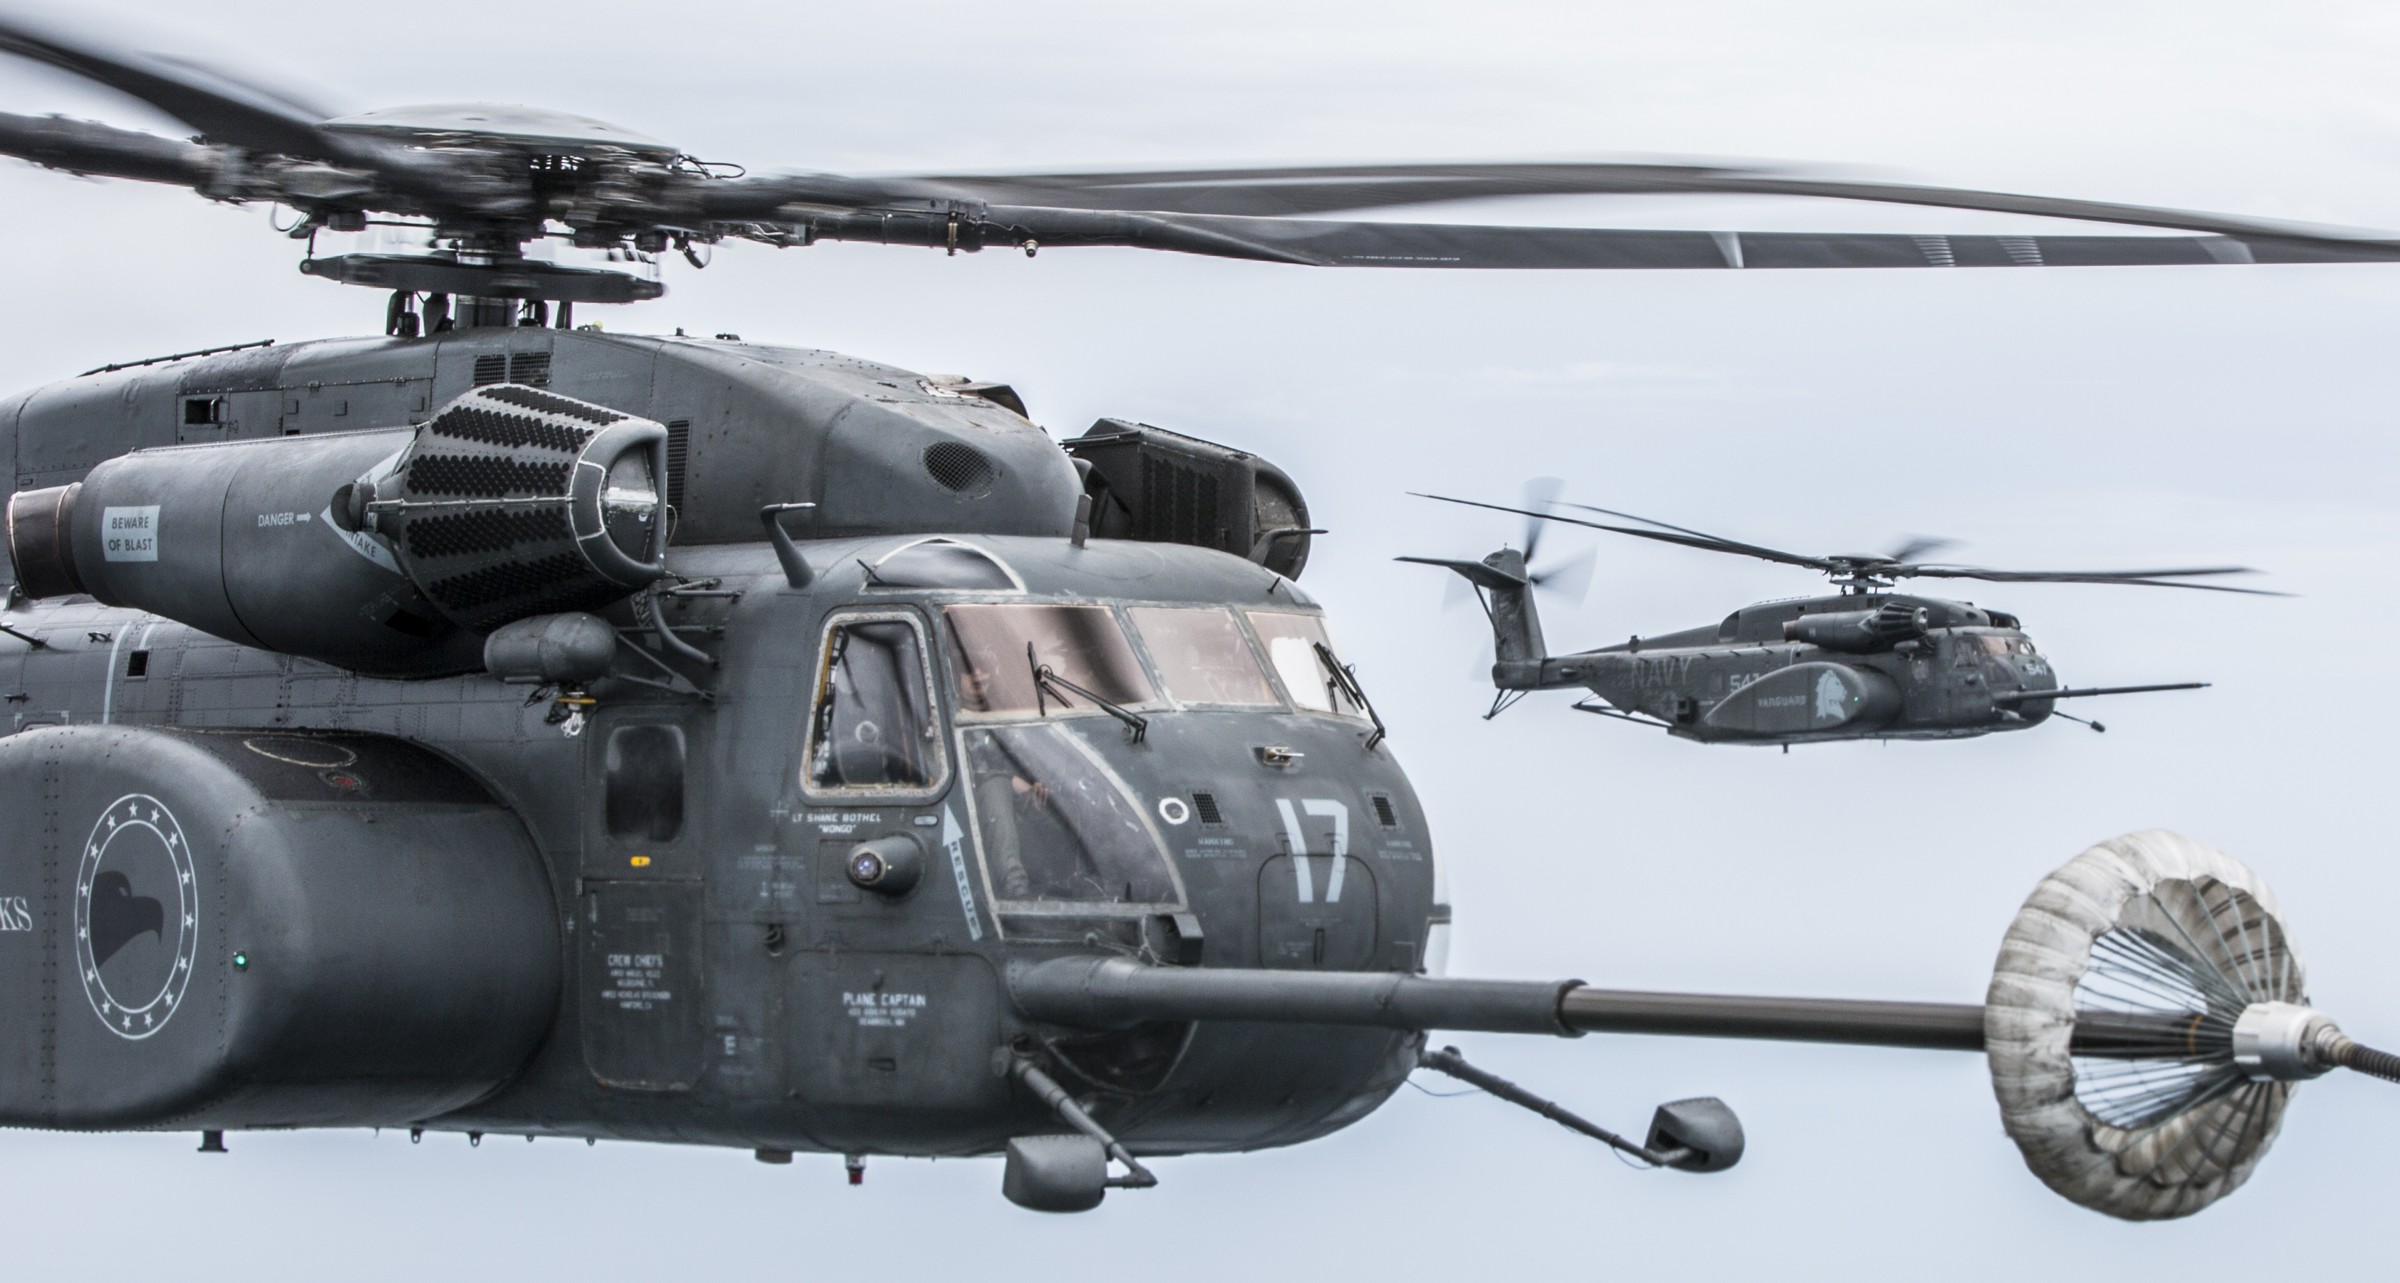 hm-15 blackhawks helicopter mine countermeasures squadron navy mh-53e sea dragon 18 aerial refueling